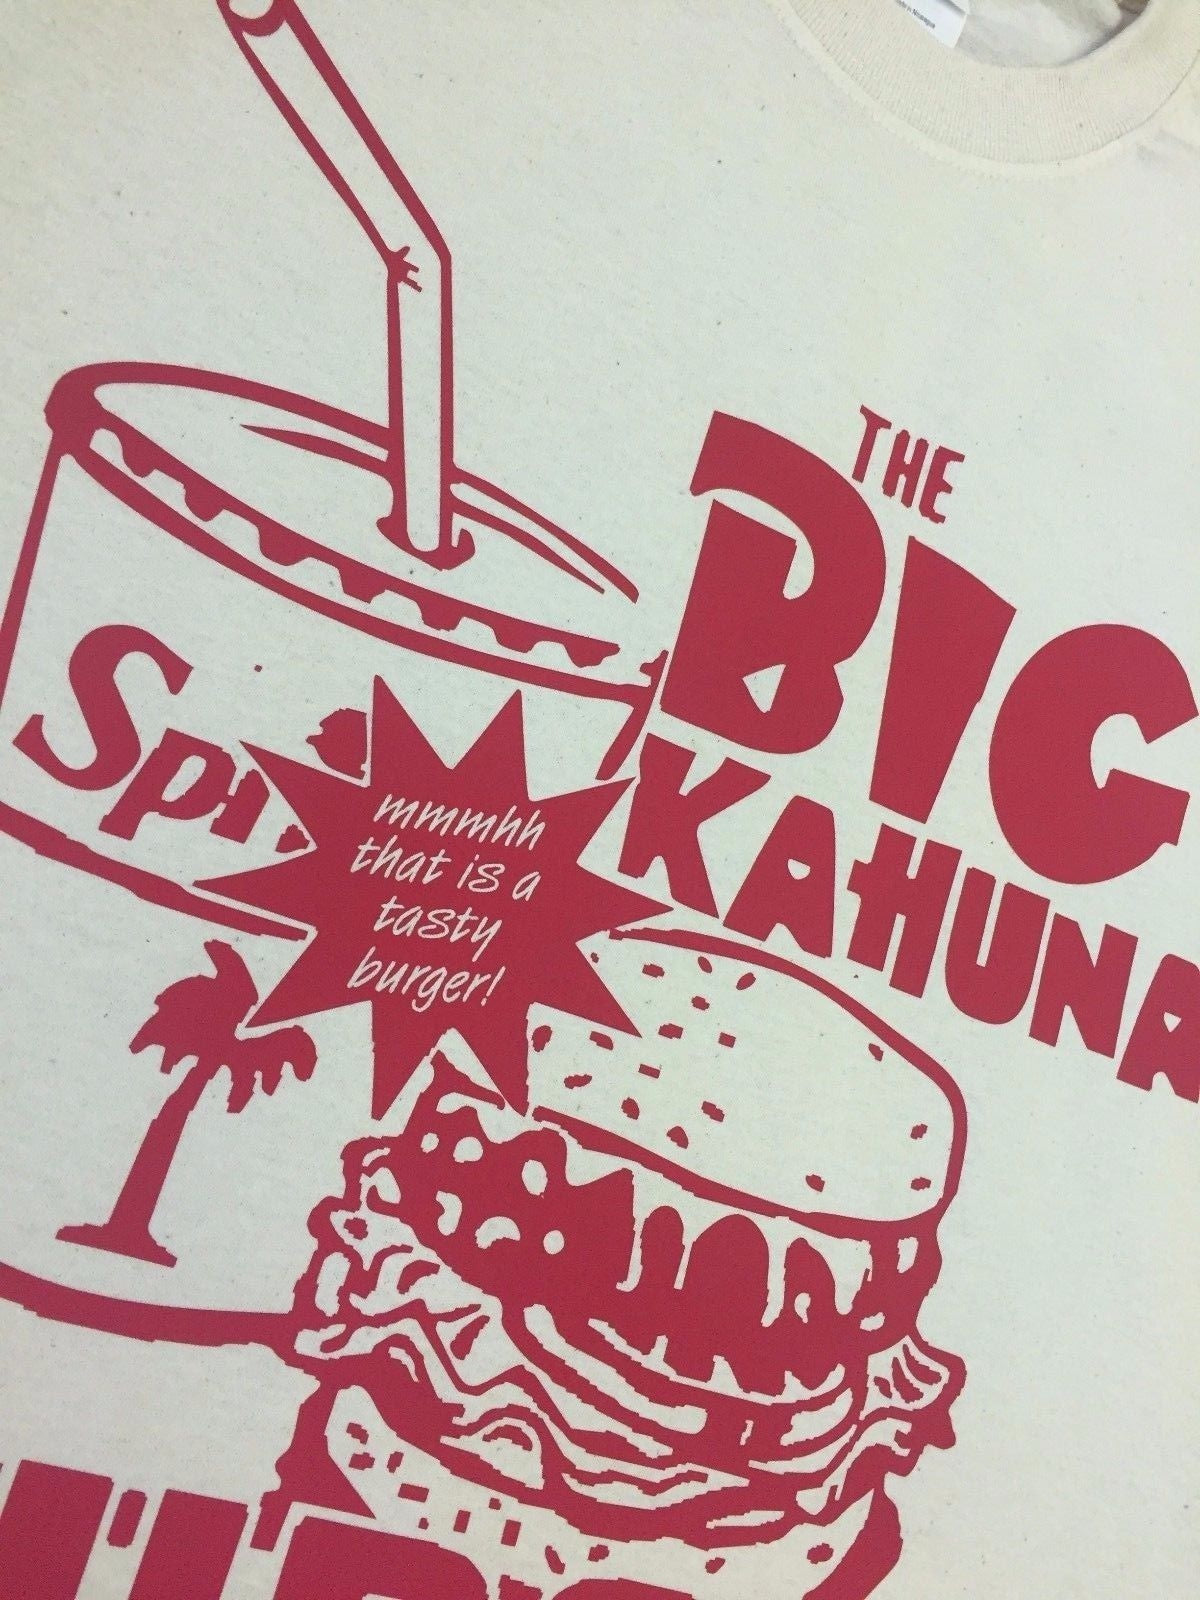 Big Kahuna Burger Pulp Fiction T-shirt - short sleeved